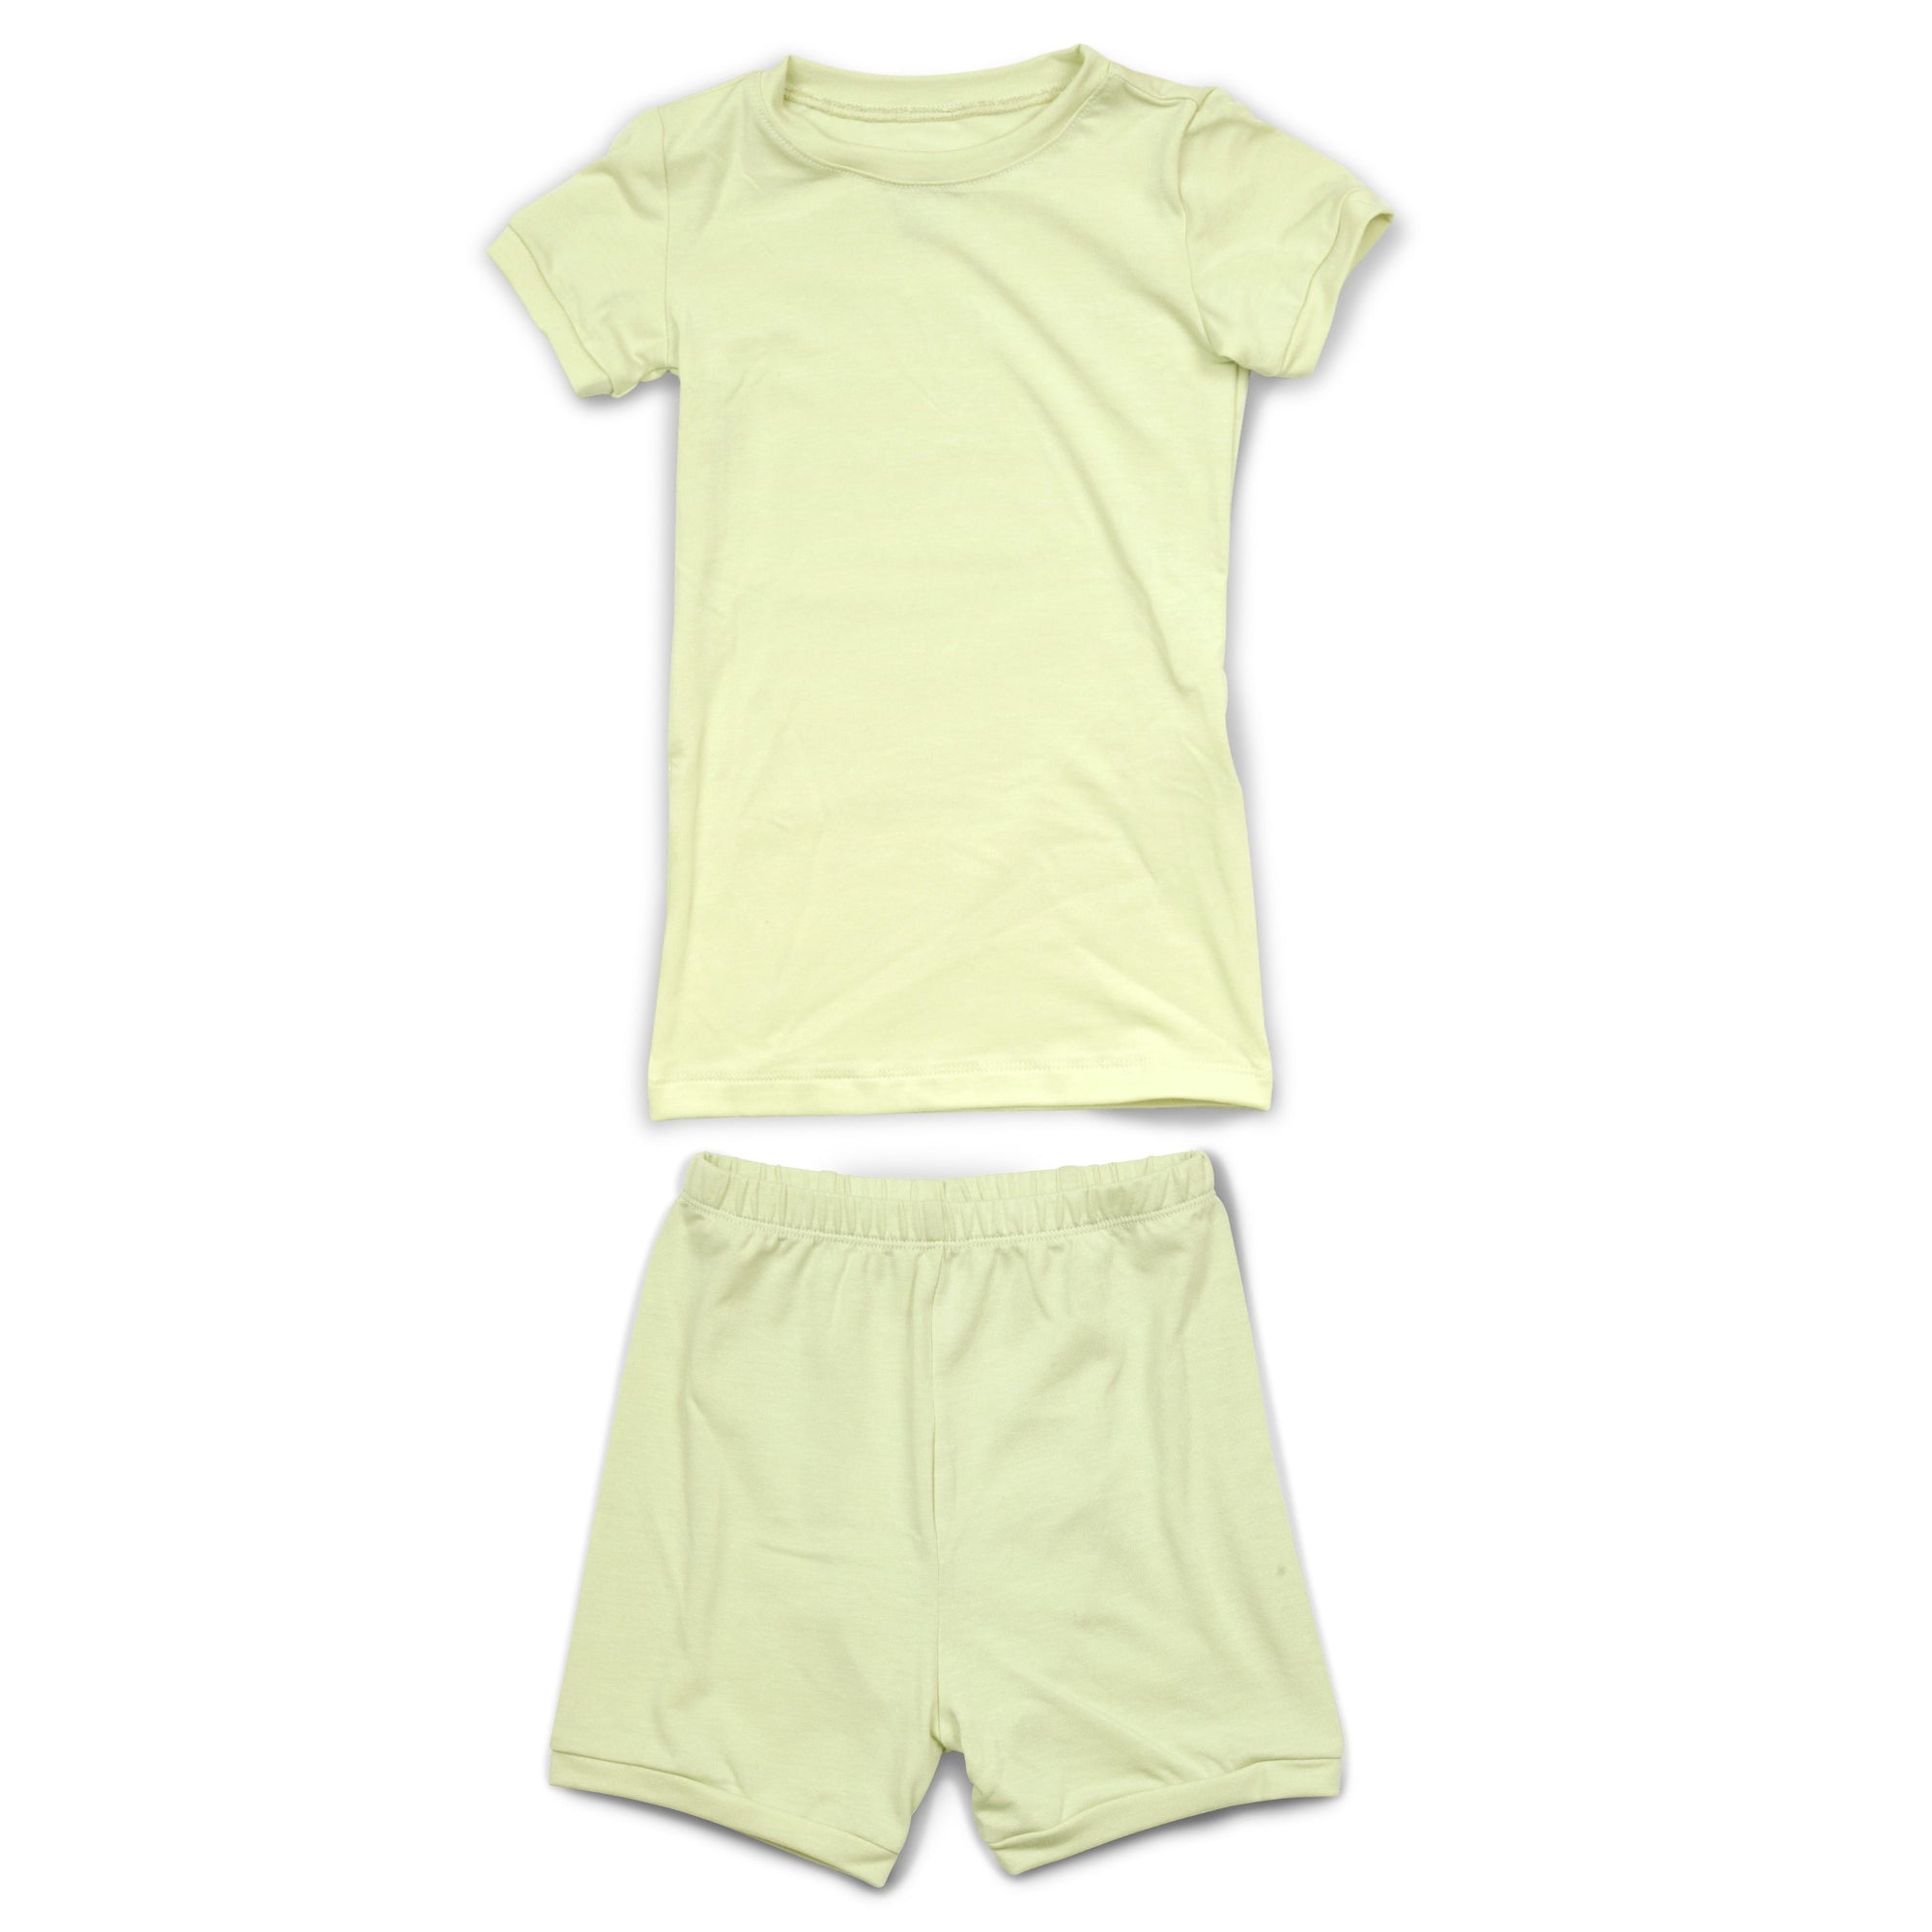 Bamboo Short Sleeve Toddler PJ Set